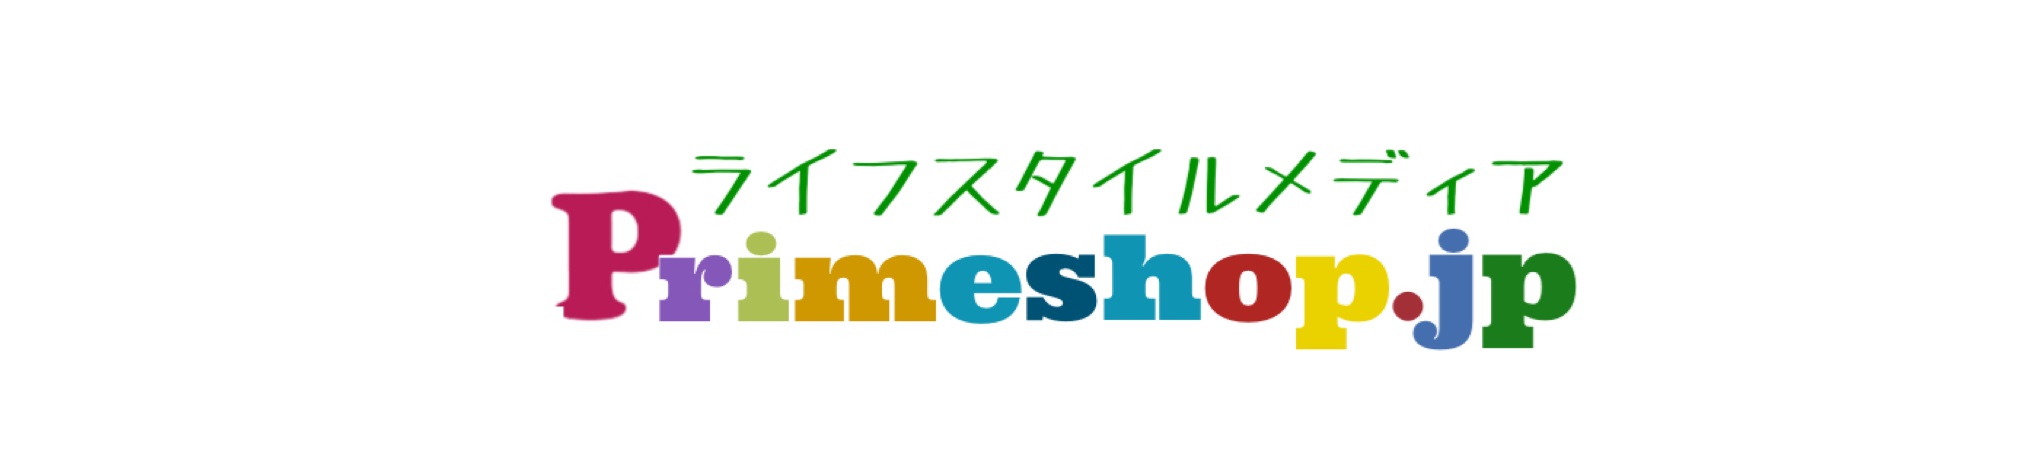 Primeshop-jp 横幅